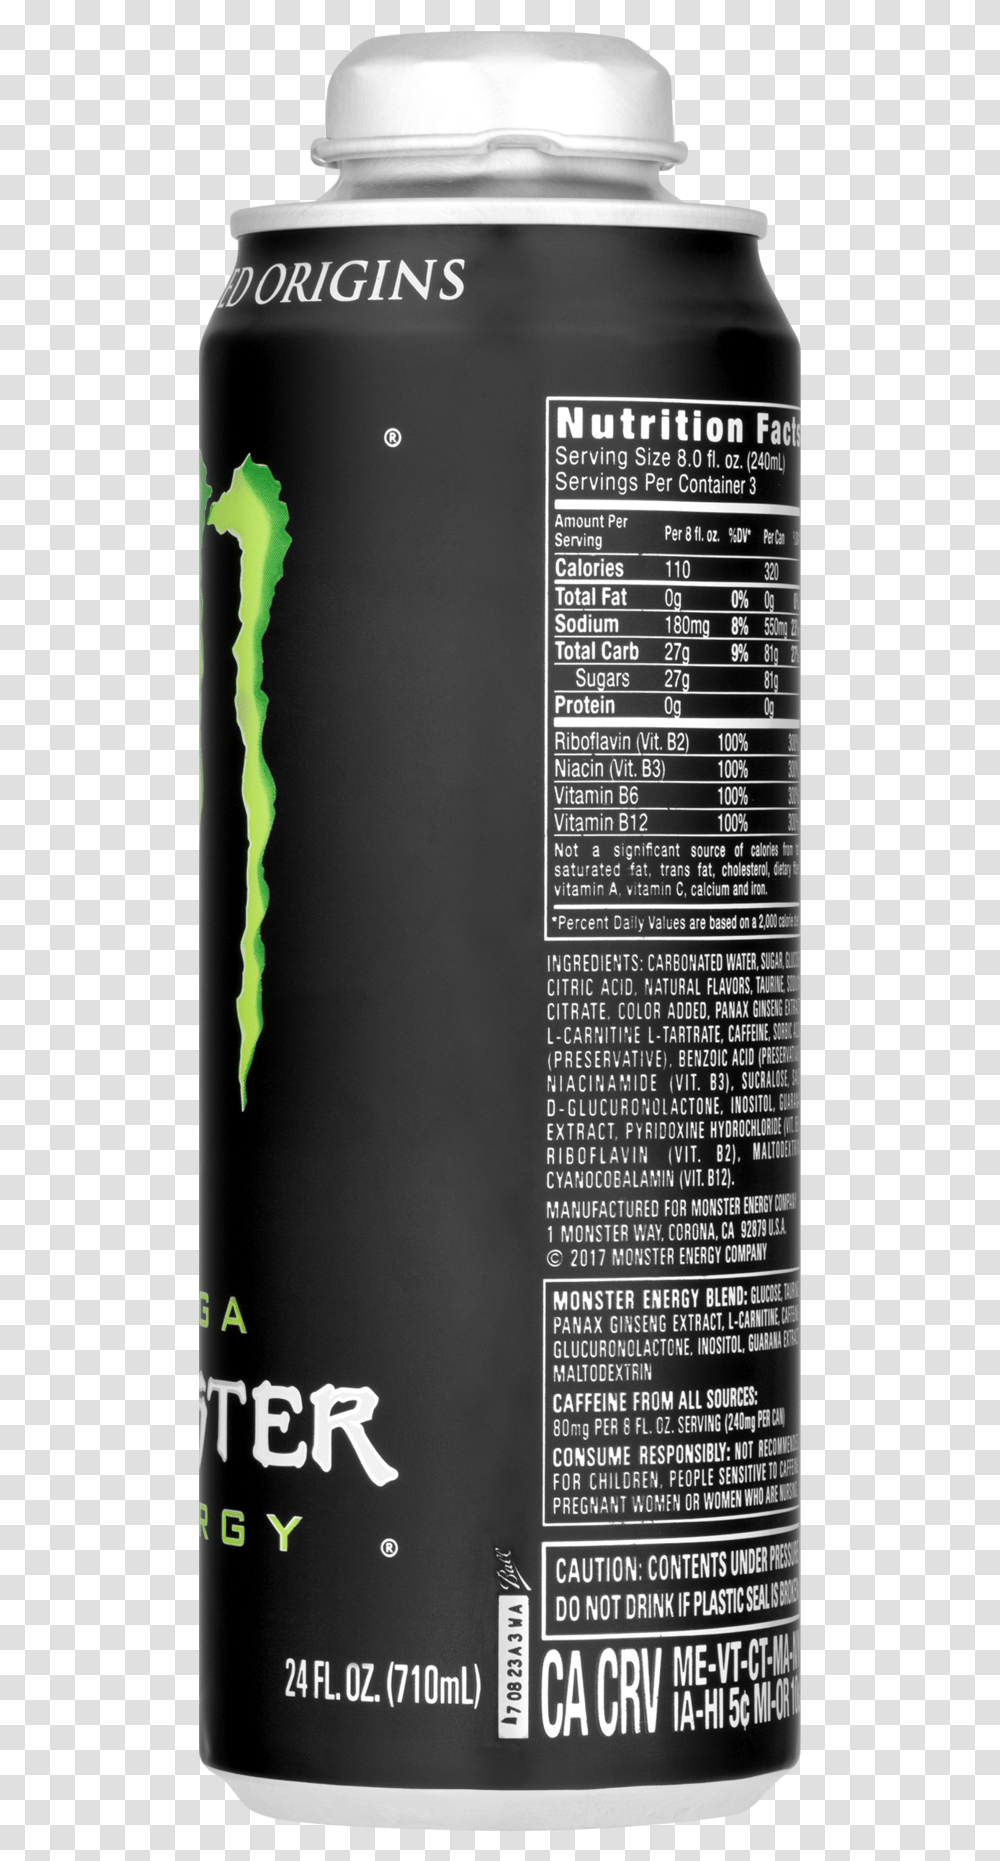 Monster Drink Monster Energy Drink Can Bfc, Word, Beer, Alcohol Transparent Png